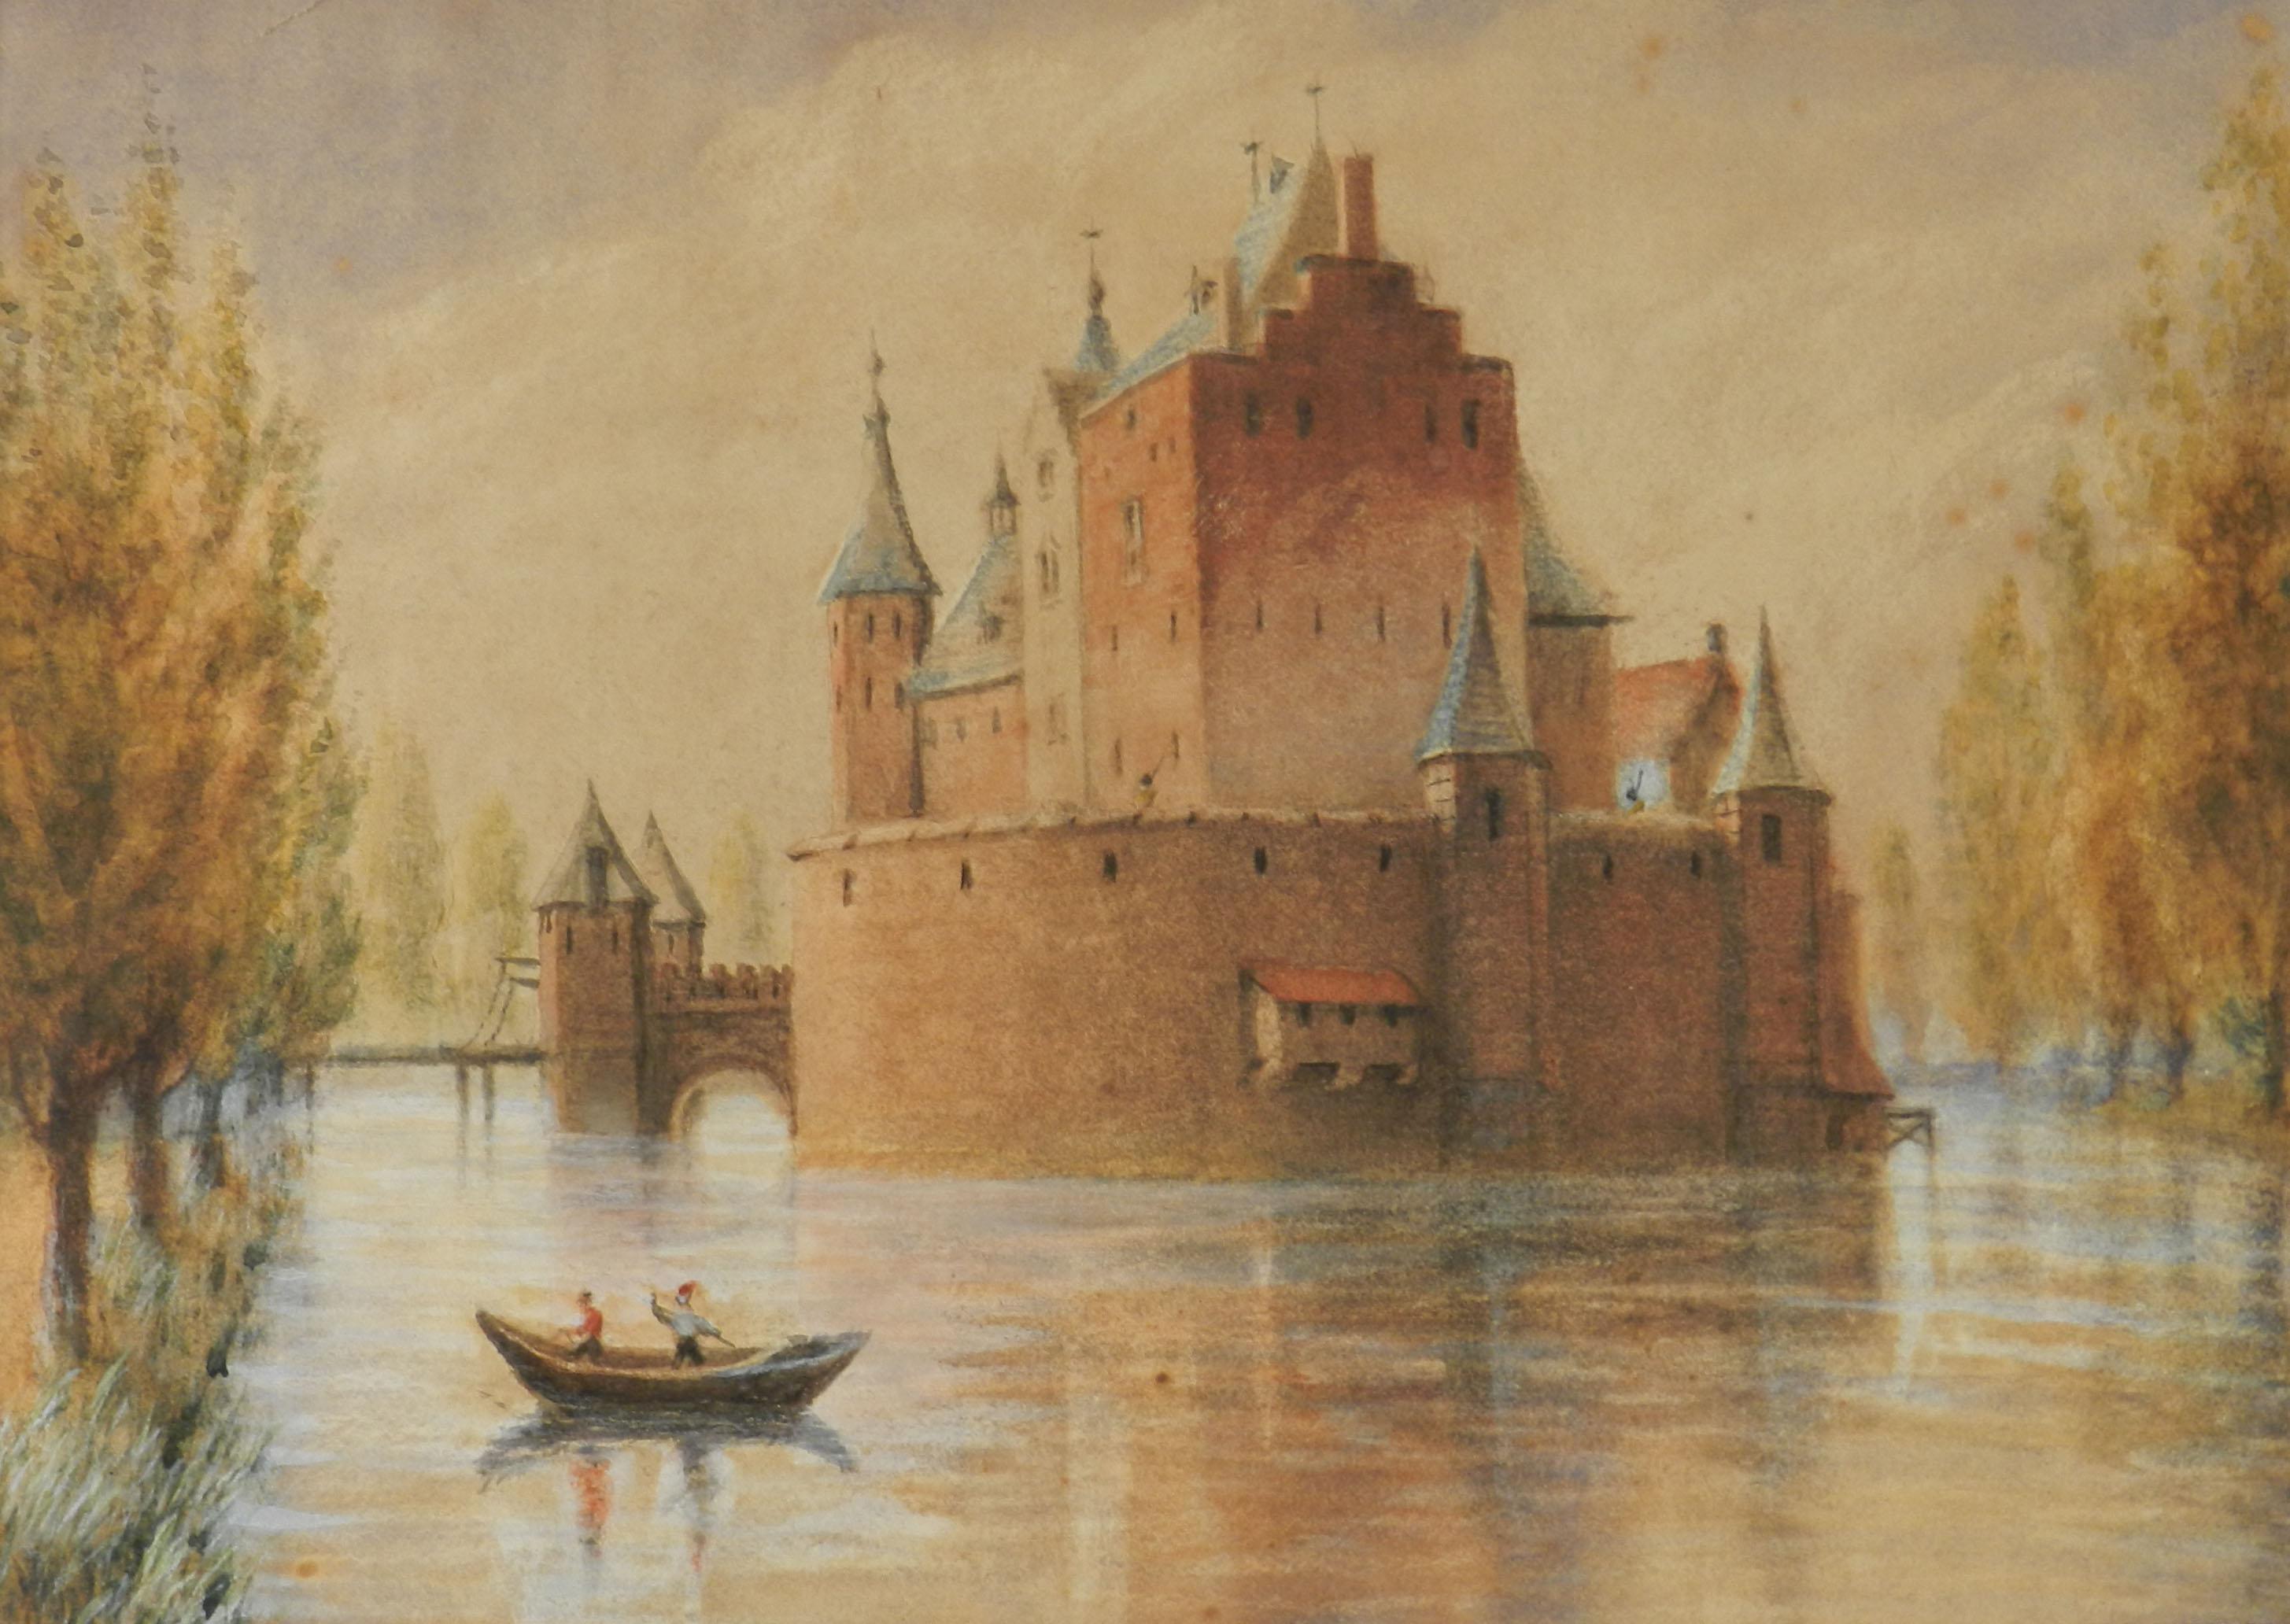 Unknown Landscape Art - Original Watercolour Castle by Lake early 20th Century